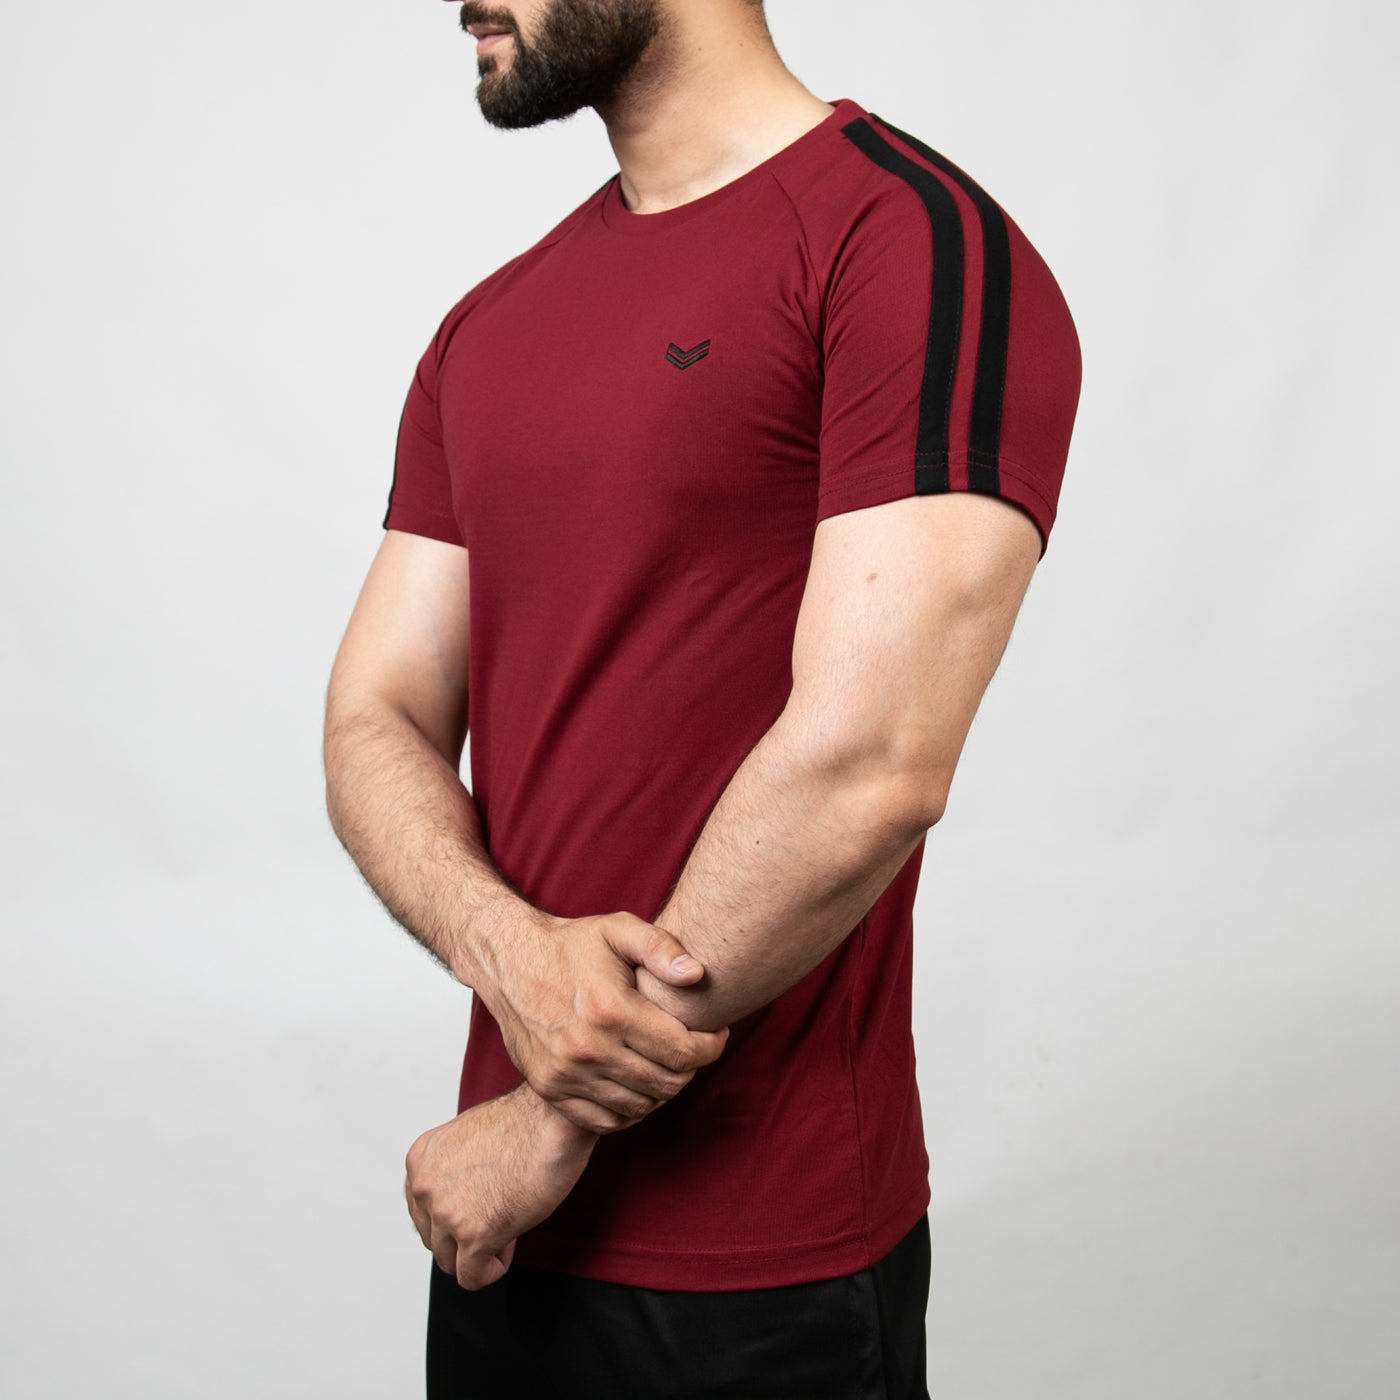 Maroon T-Shirt with Black Shoulder Stripes